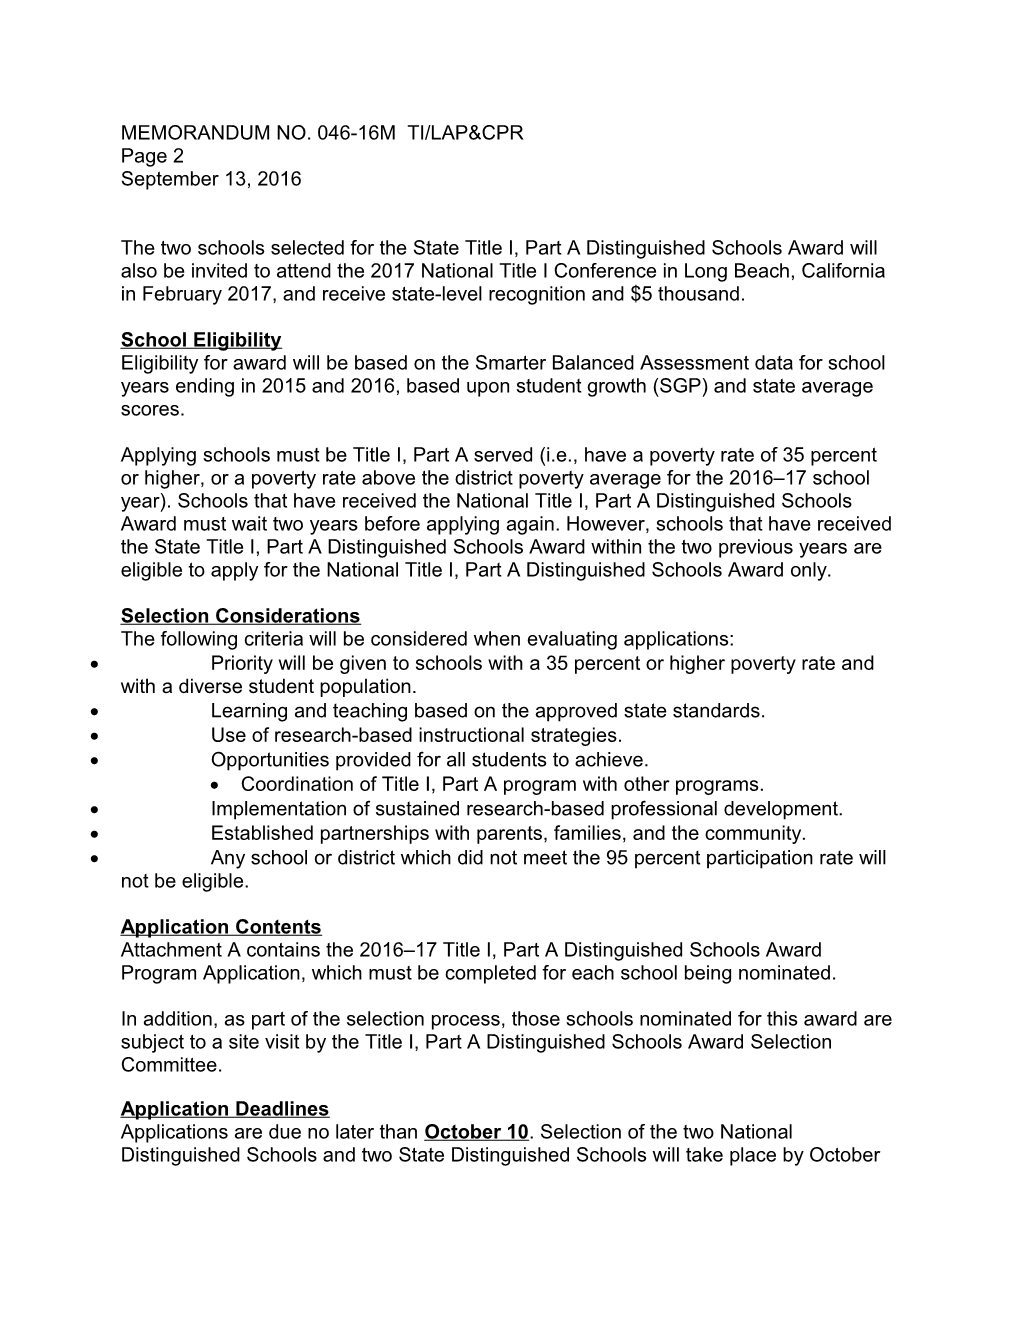 Memorandum No.046-16M Title I/Lap & Consolidated Program Review